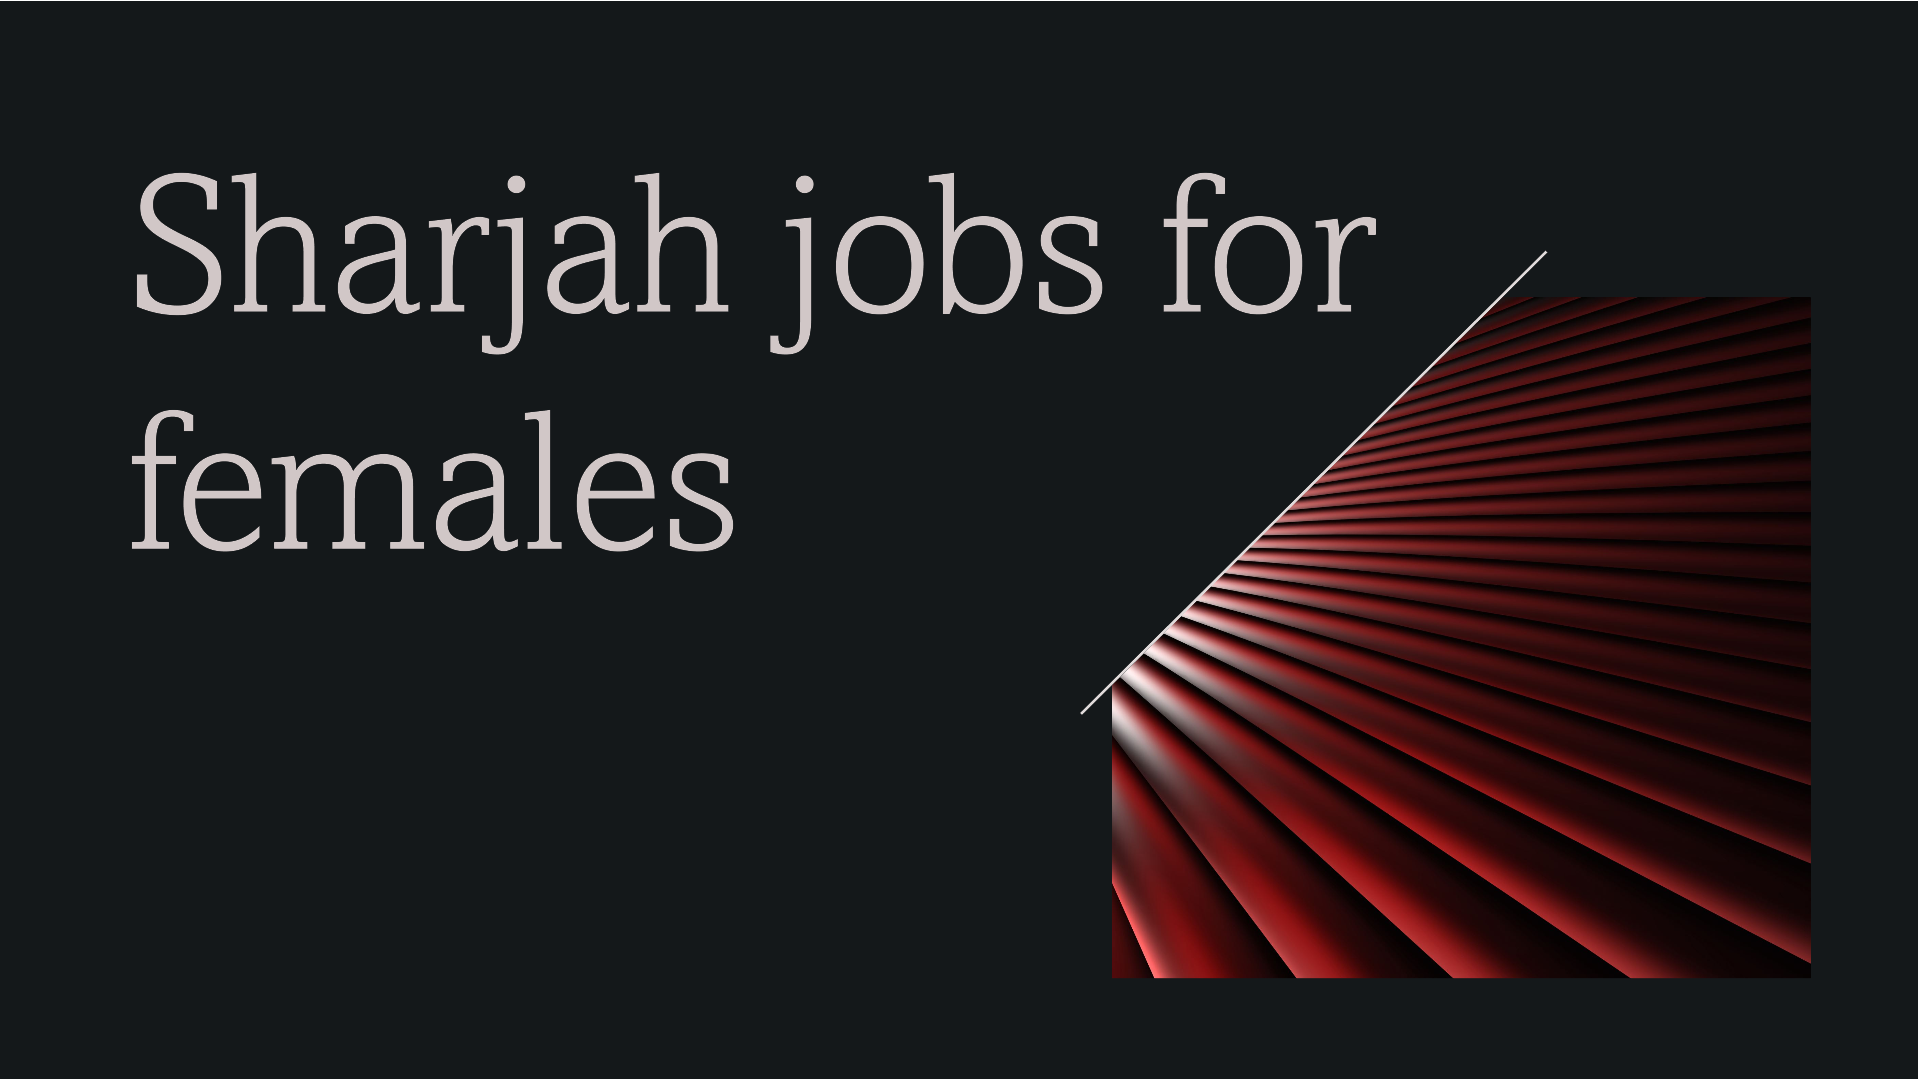 Sharjah jobs for females